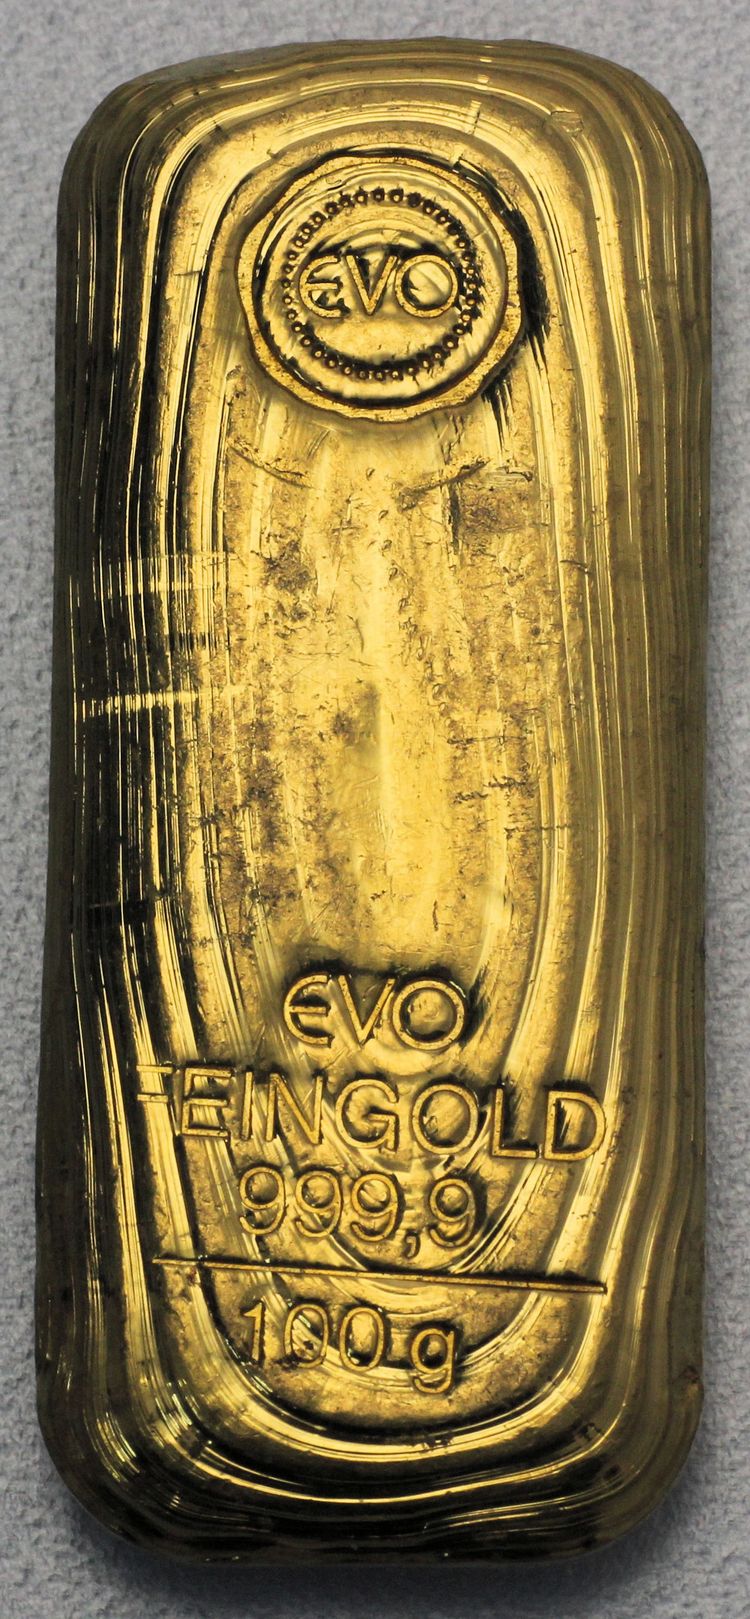 100g Goldbarren EVO